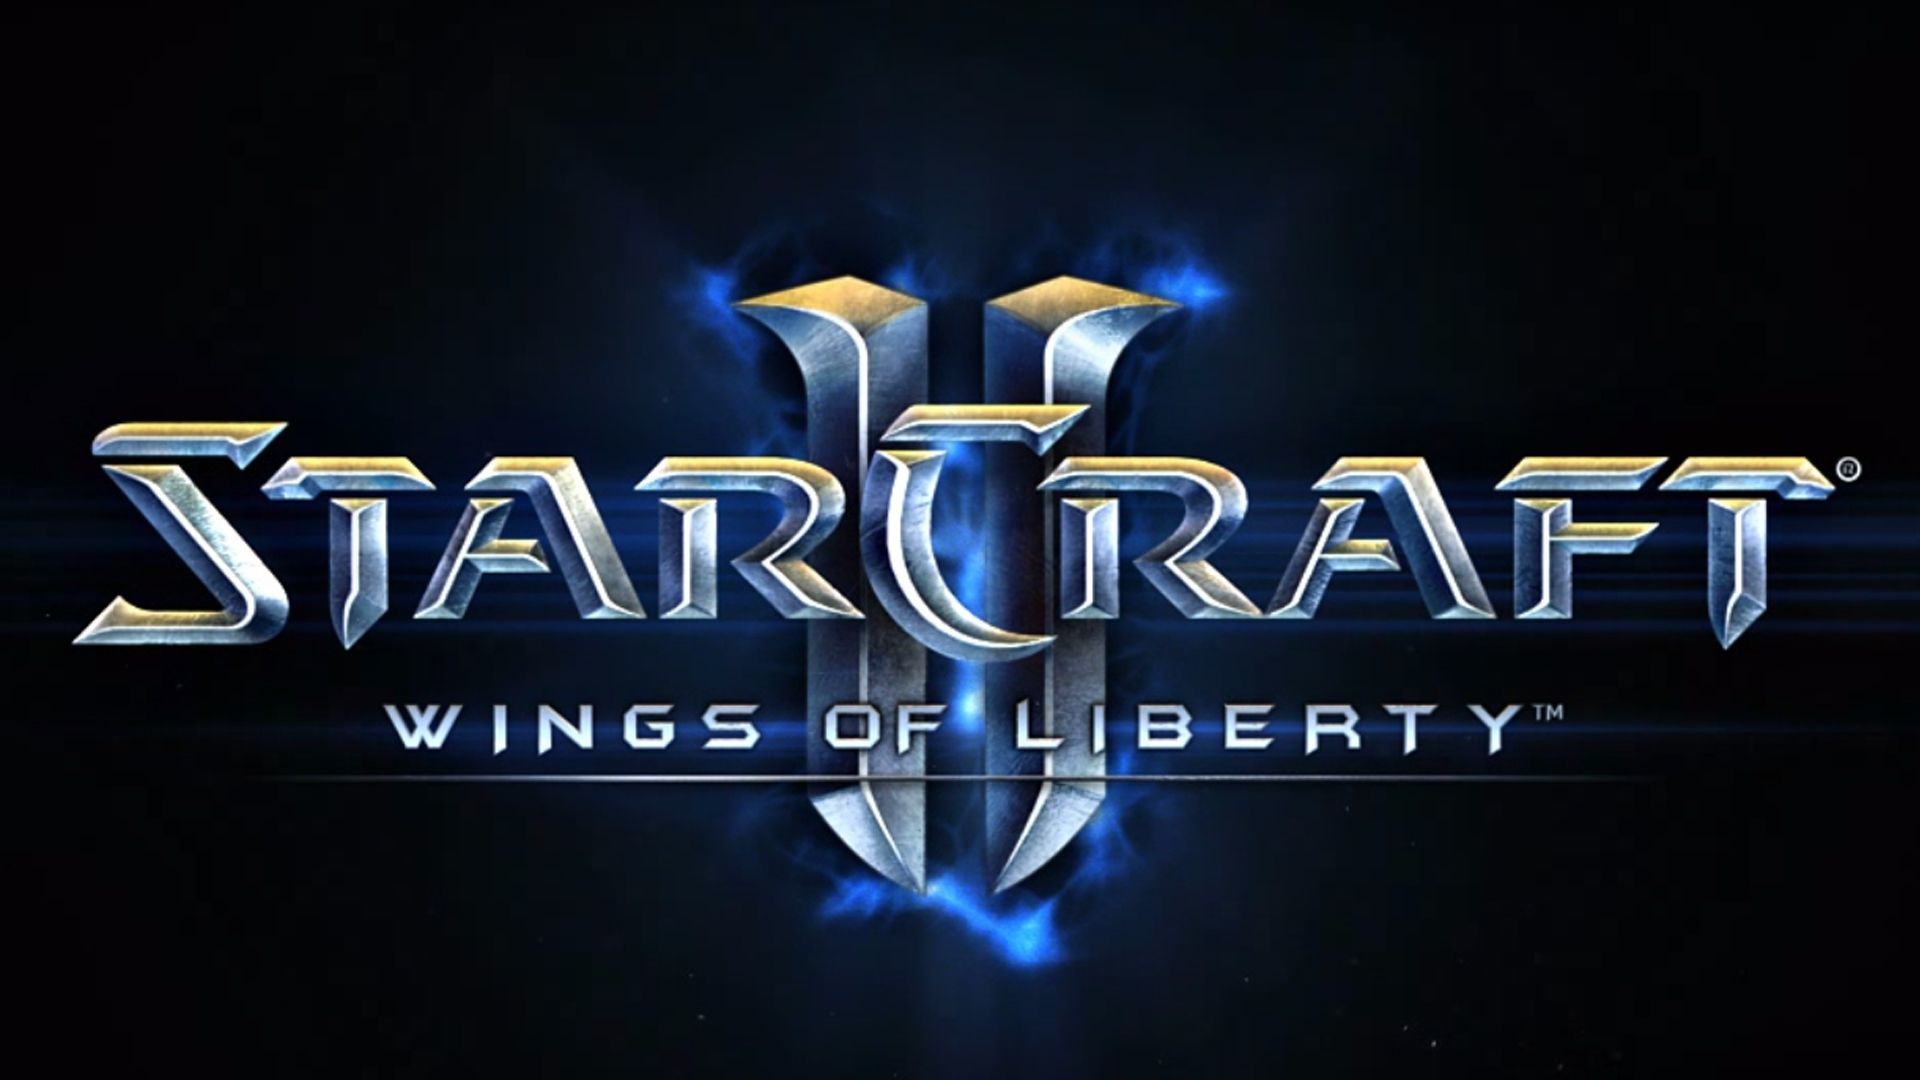 1920x1080 View Starcraft II: Wings Of Liberty Wallpaper Fullscreen